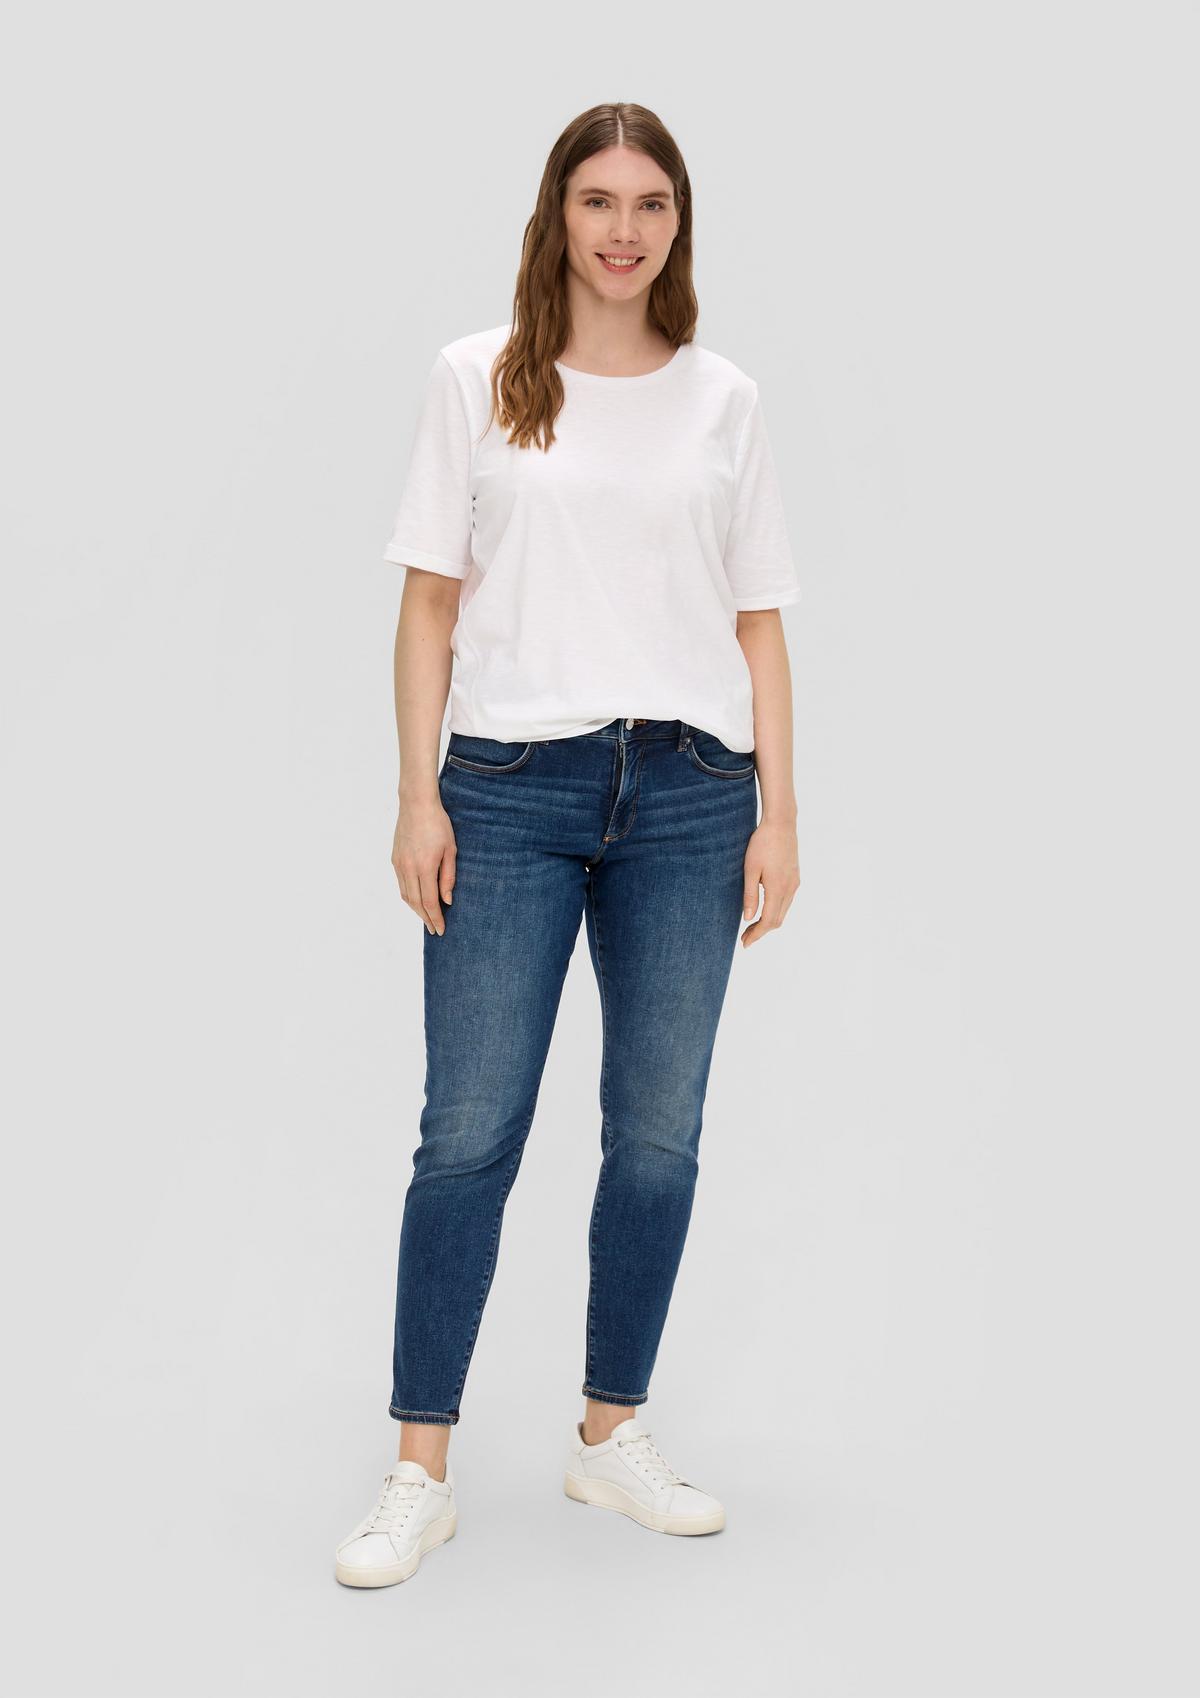 Jeans hlače Izabell / kroj Skinny Fit / Mid Rise / oprijete hlačnice